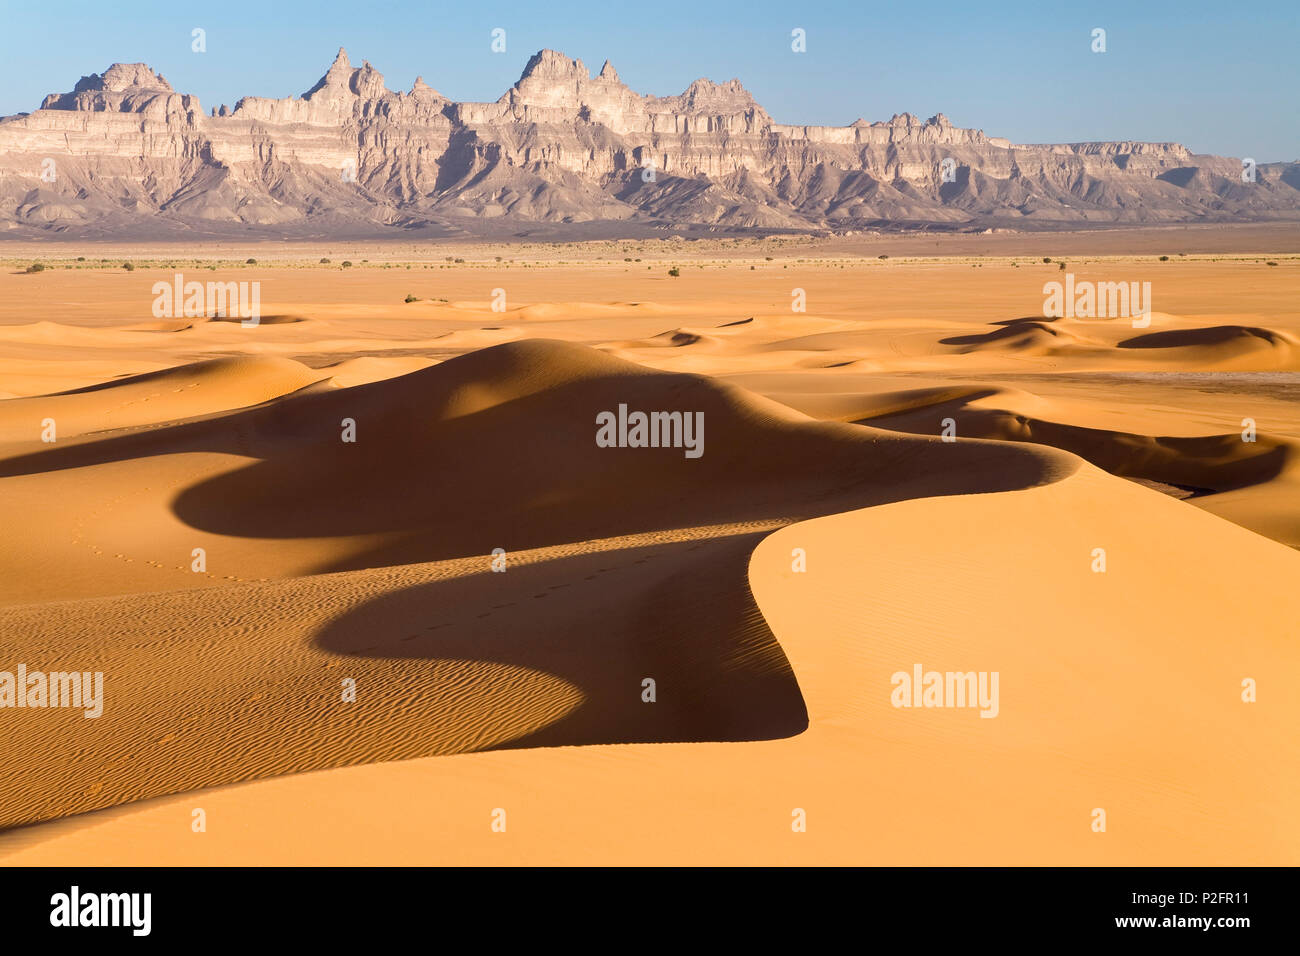 E Sanddunes Idinen montagne nel deserto libico, Libia, sahara Africa del Nord Foto Stock